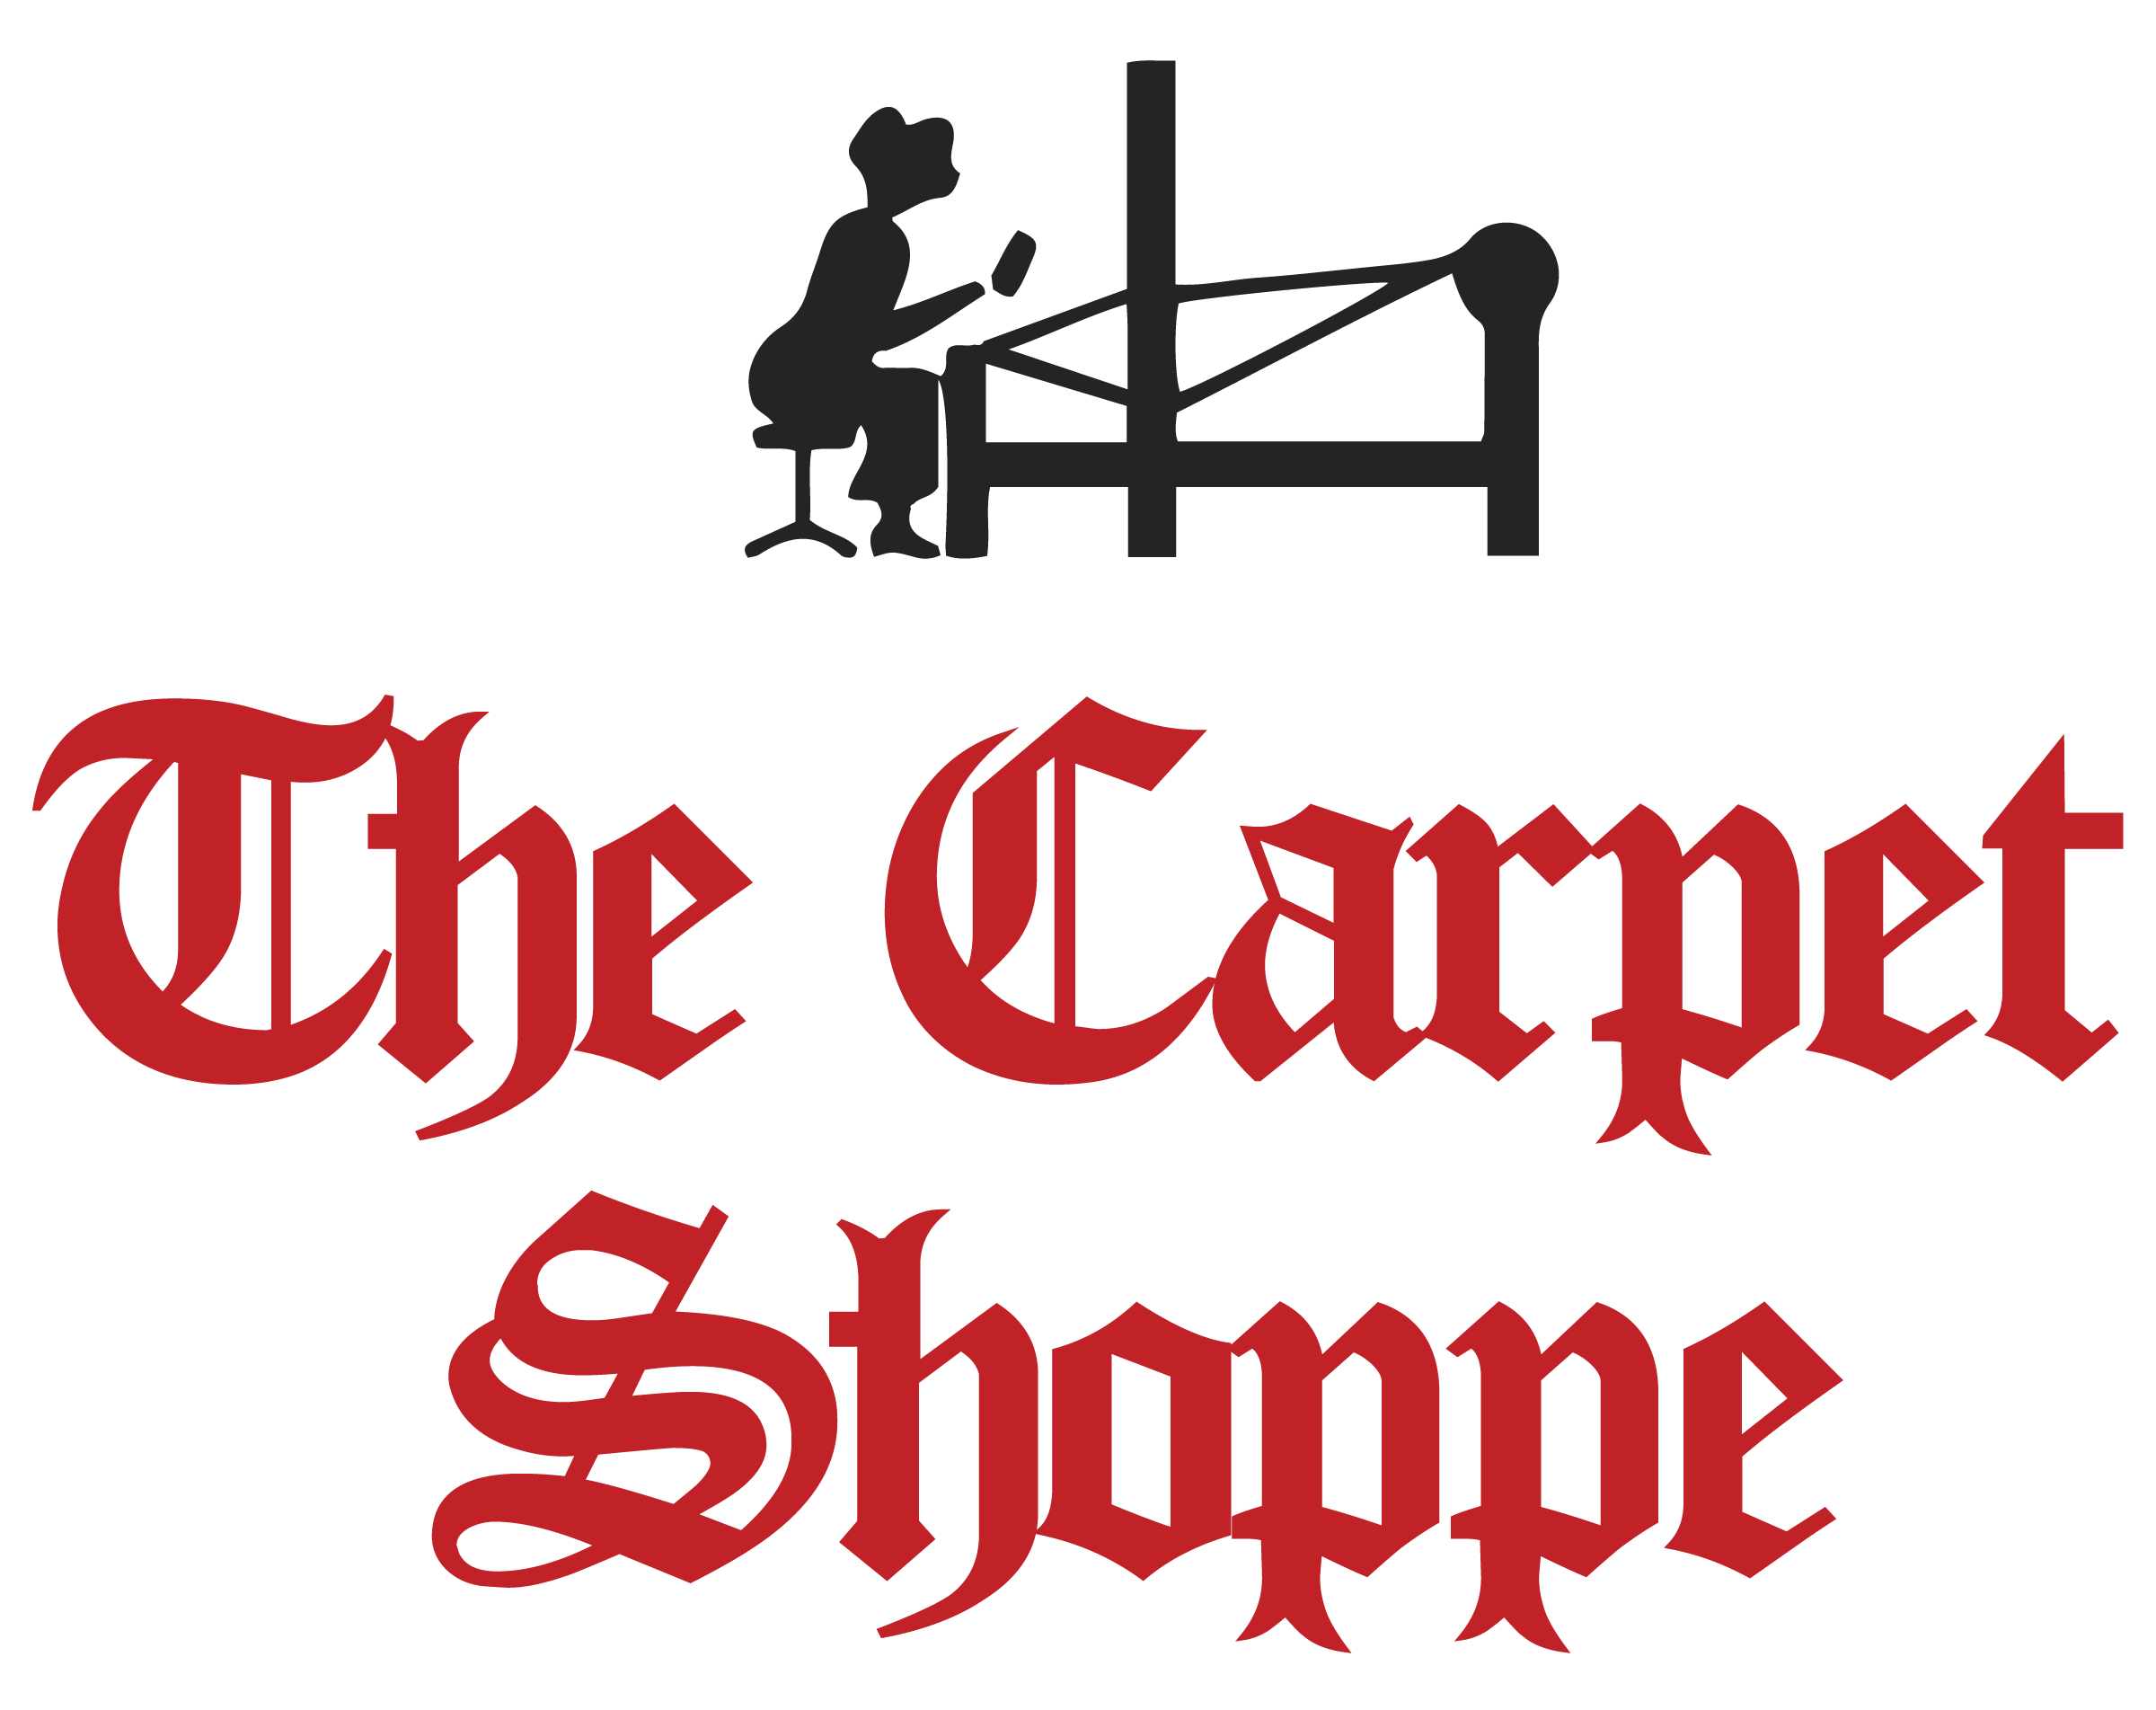 The Carpet Shoppe logo